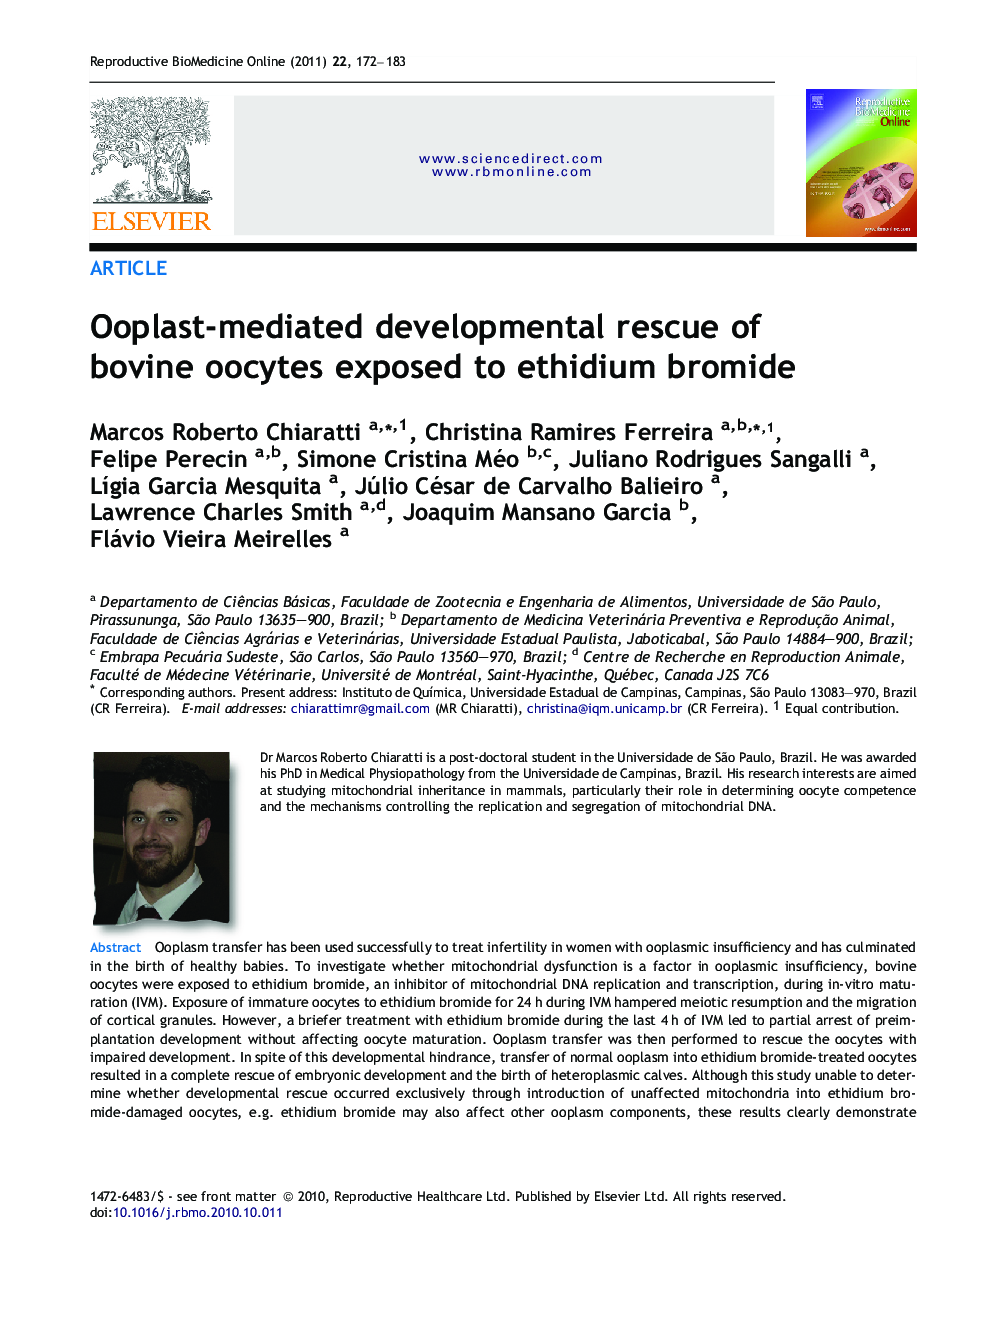 Ooplast-mediated developmental rescue of bovine oocytes exposed to ethidium bromide 